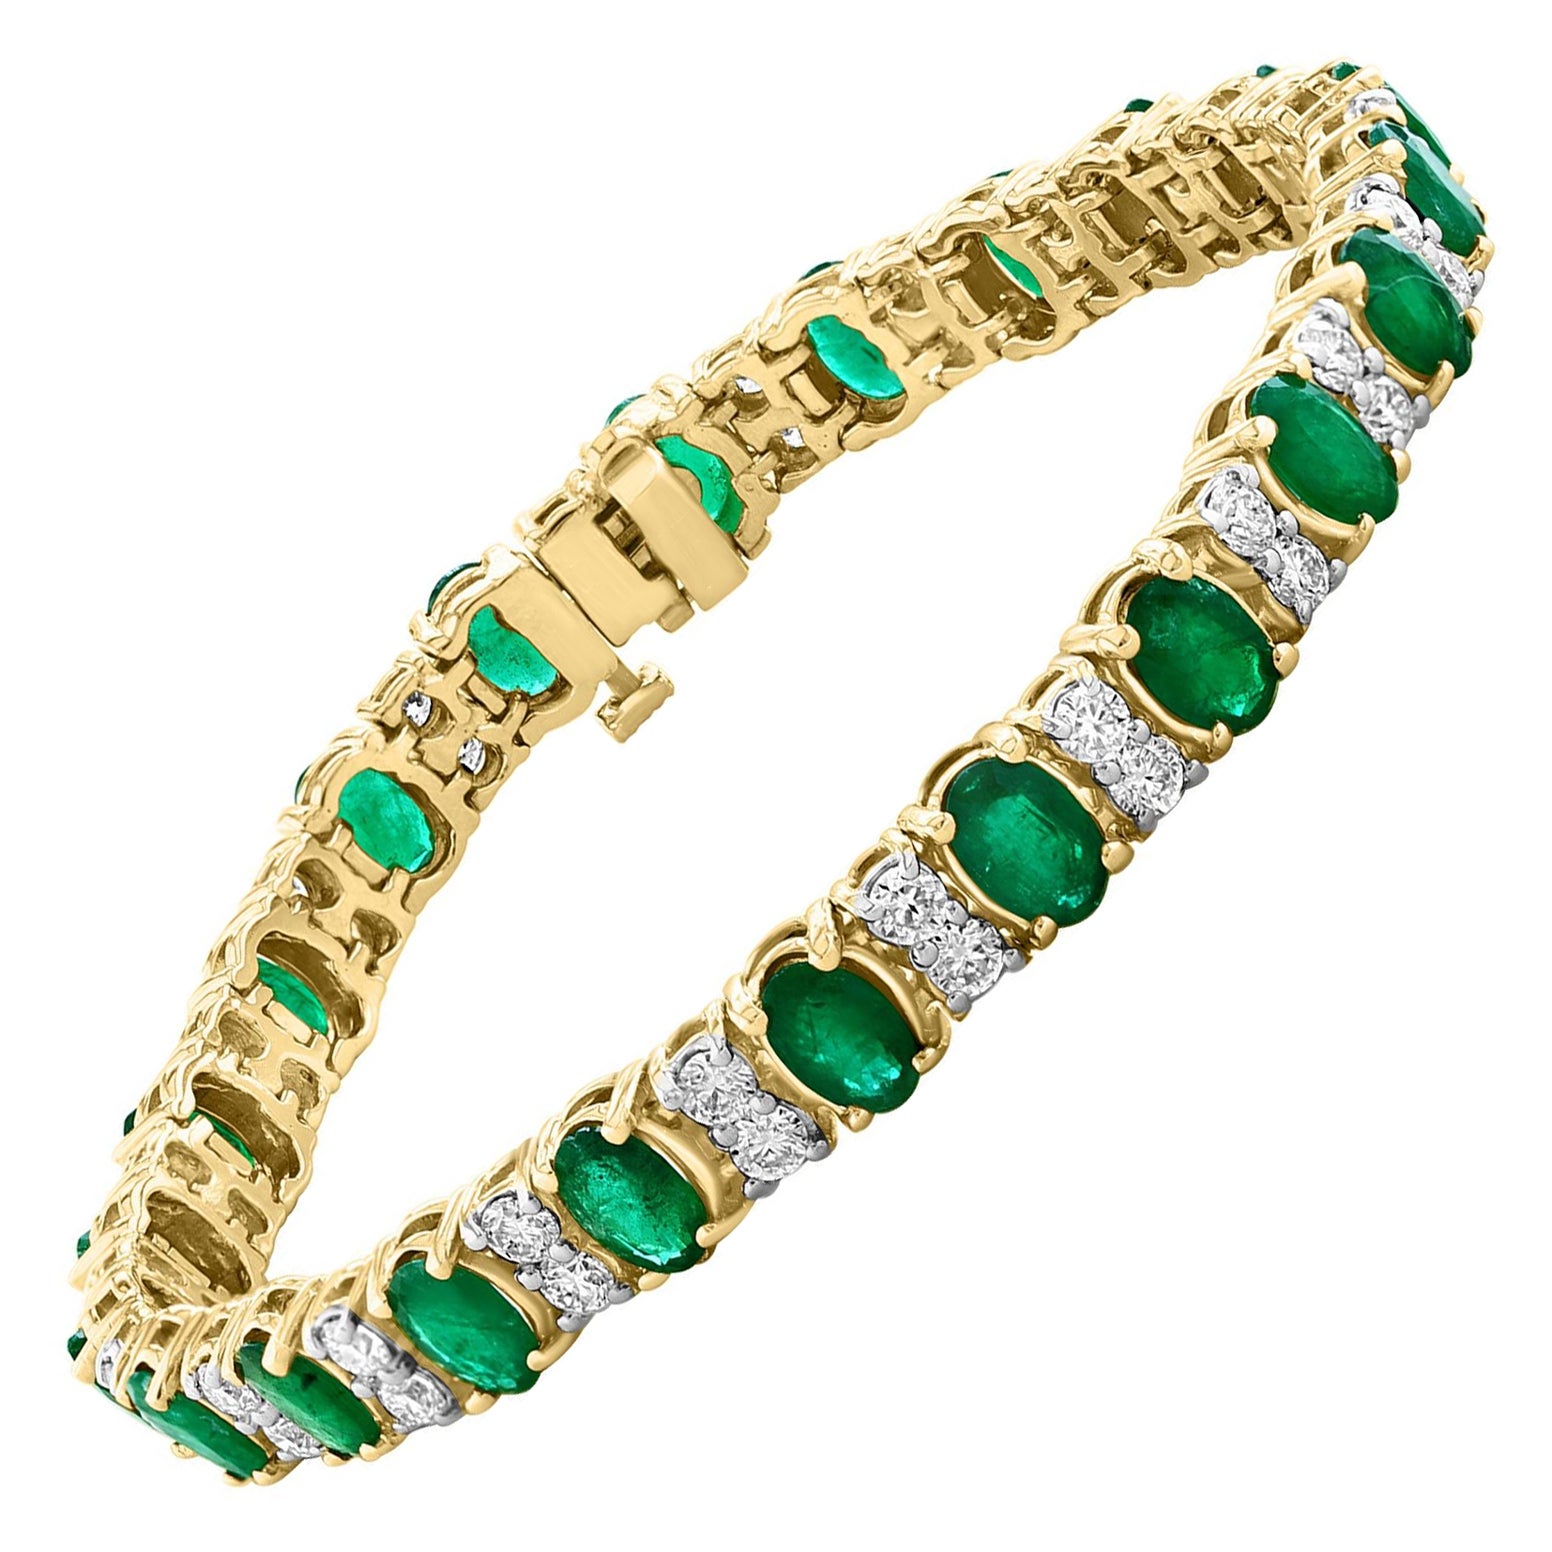 12 Carat Natural Emerald & 2.8 Carat Diamond Tennis Bracelet 14 Kt Yellow Gold For Sale